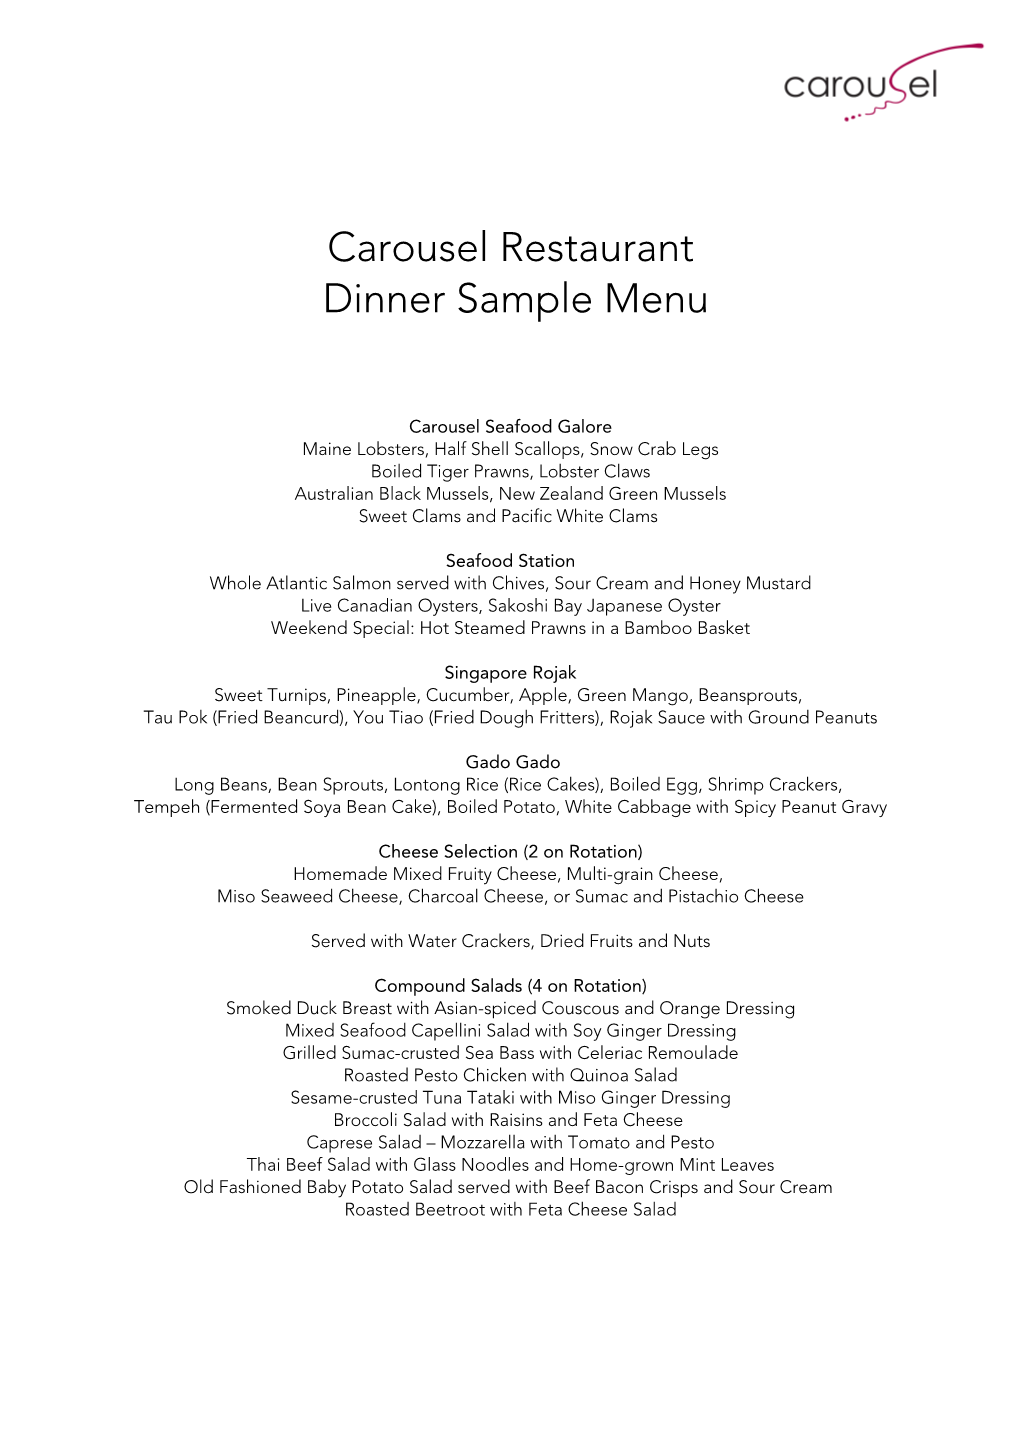 Carousel Seafood Galore